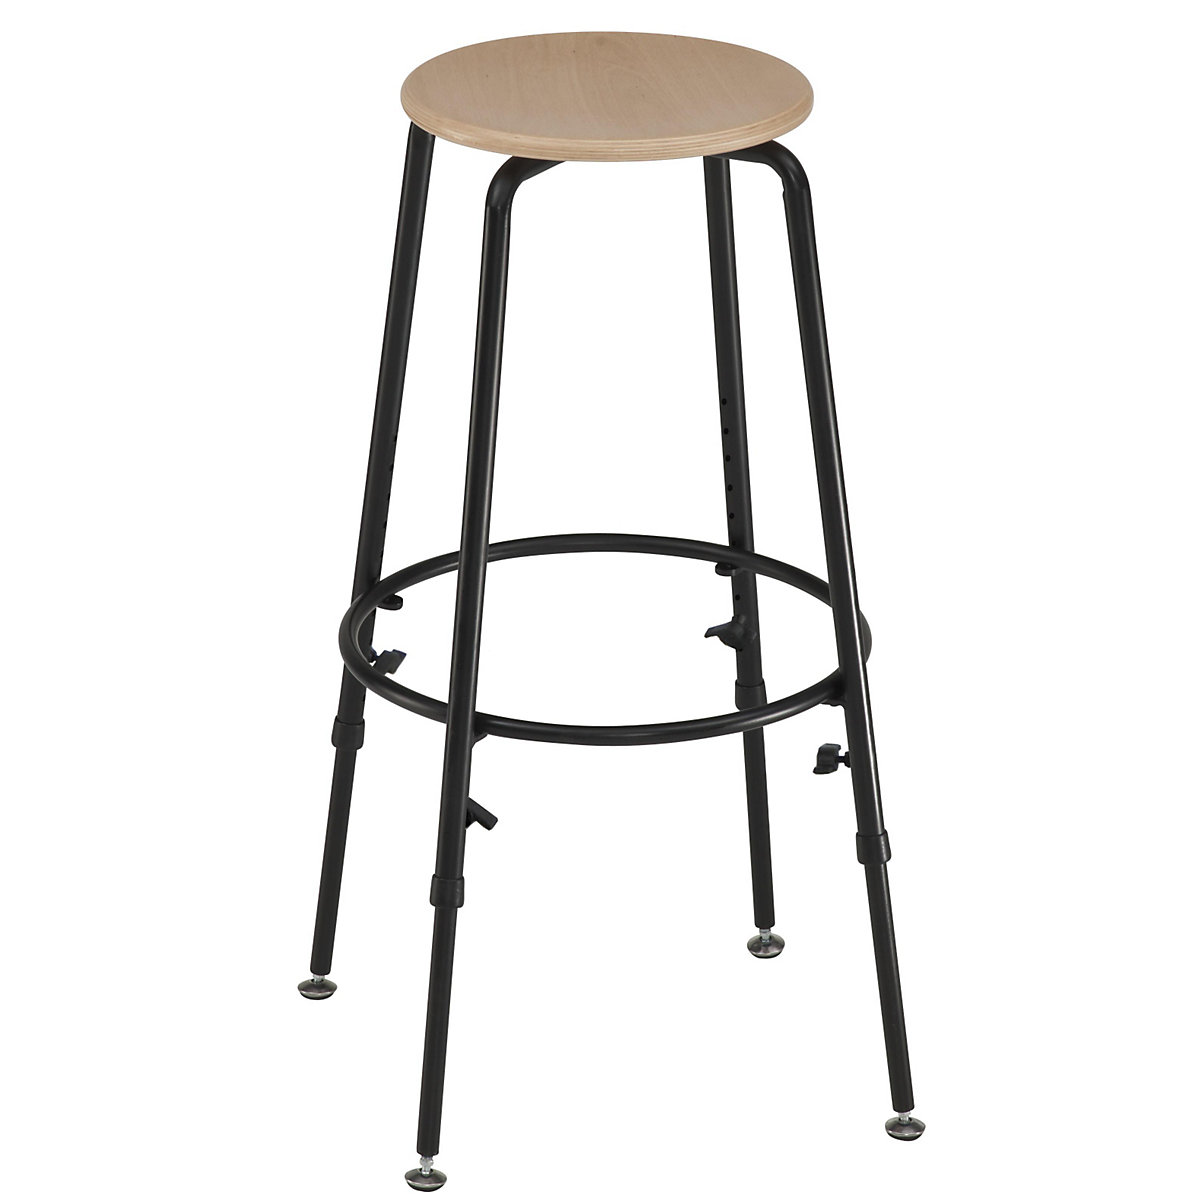 Industrial stool, height adjustable - meychair